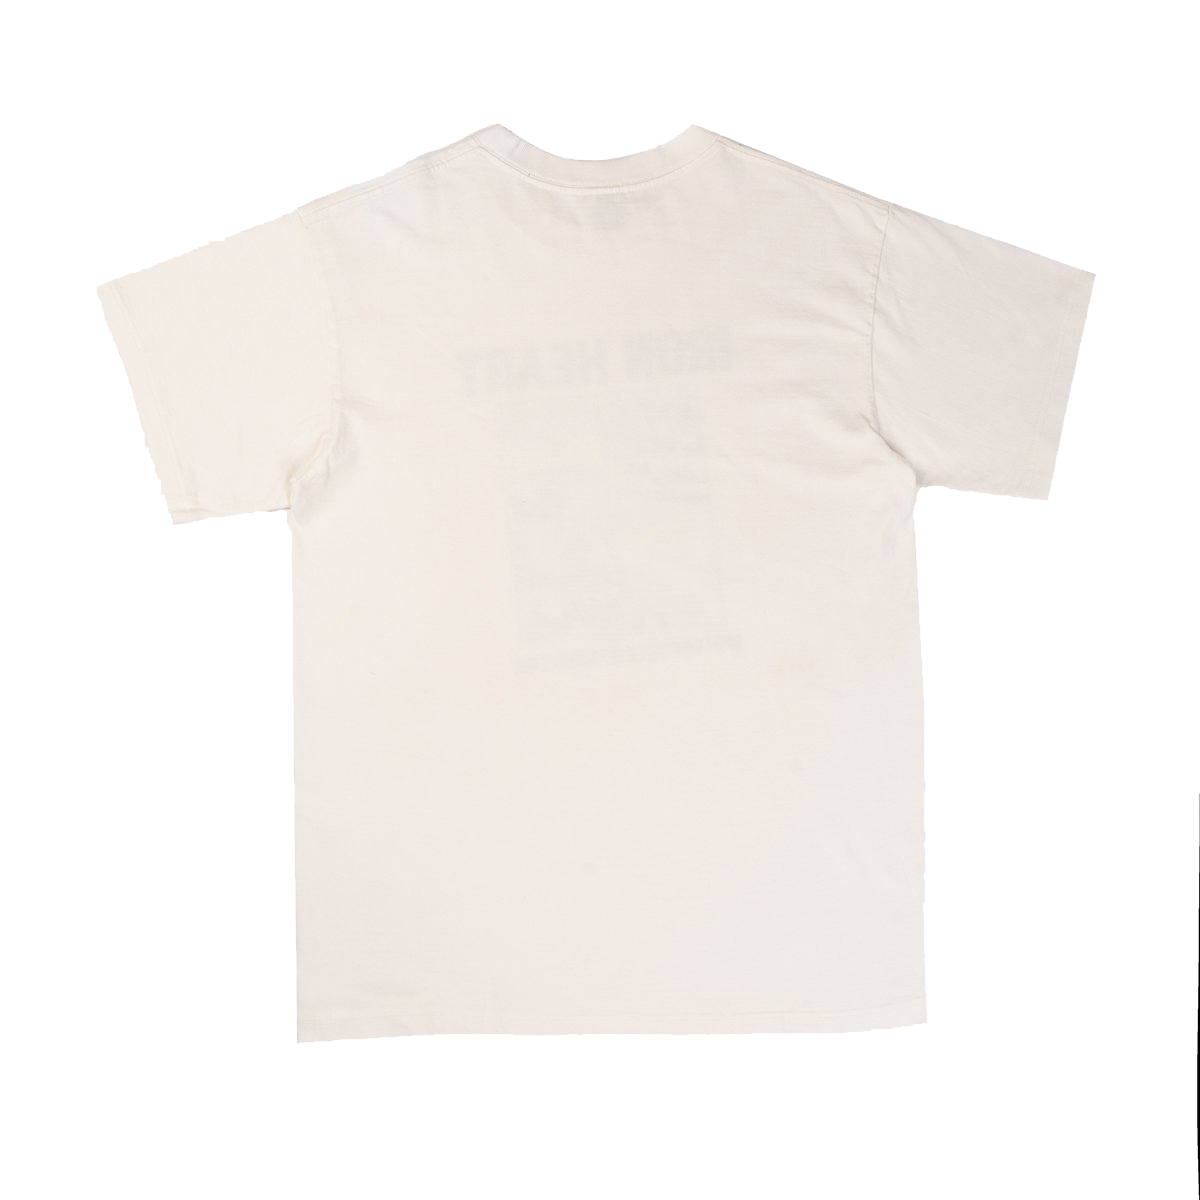 IHT-2105-WHT - 7.5oz Printed Loopwheel Crew Neck T-Shirt - White